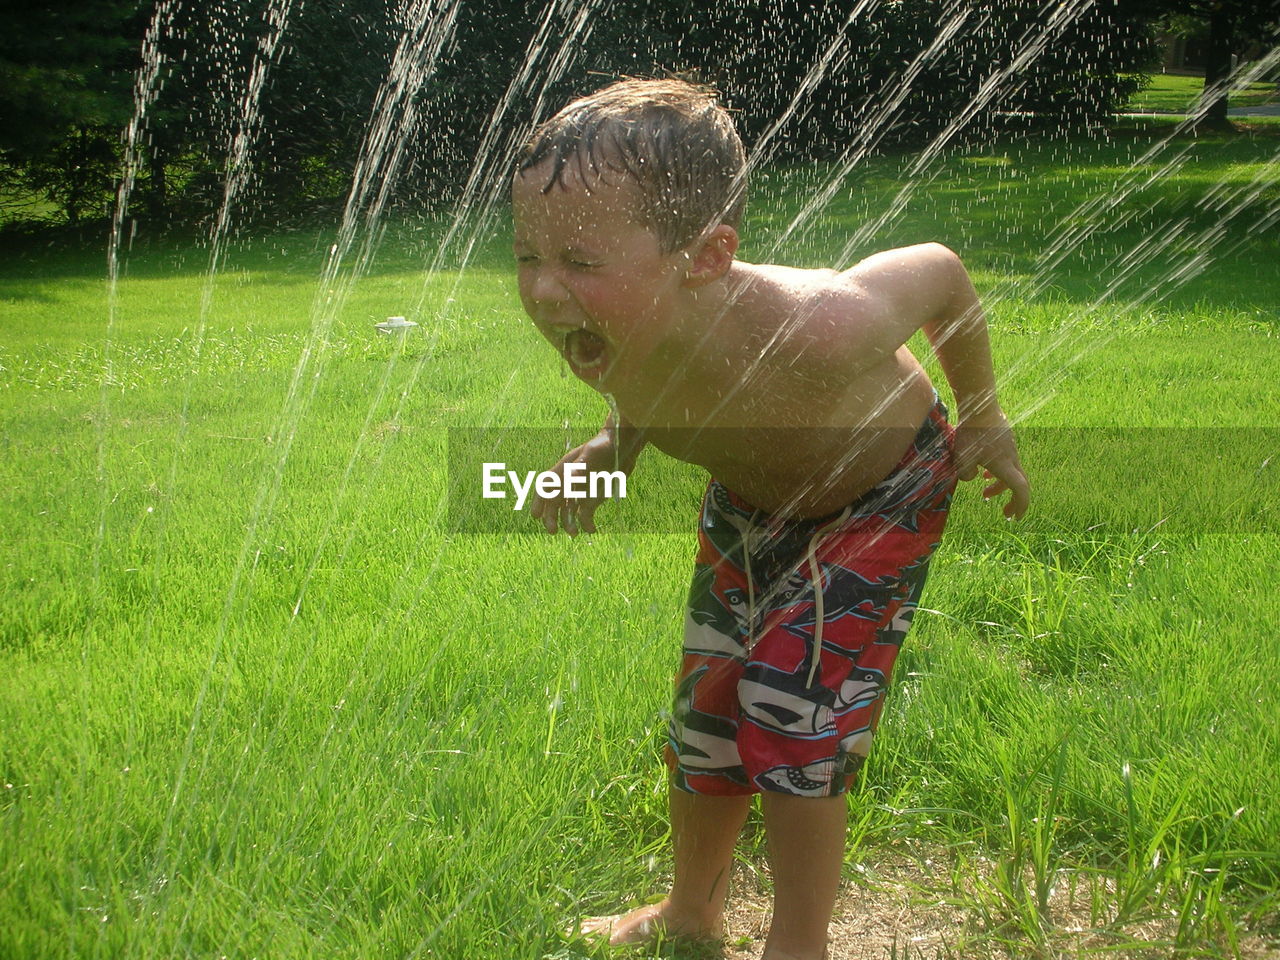 Shirtless boy playing with sprinkler at park